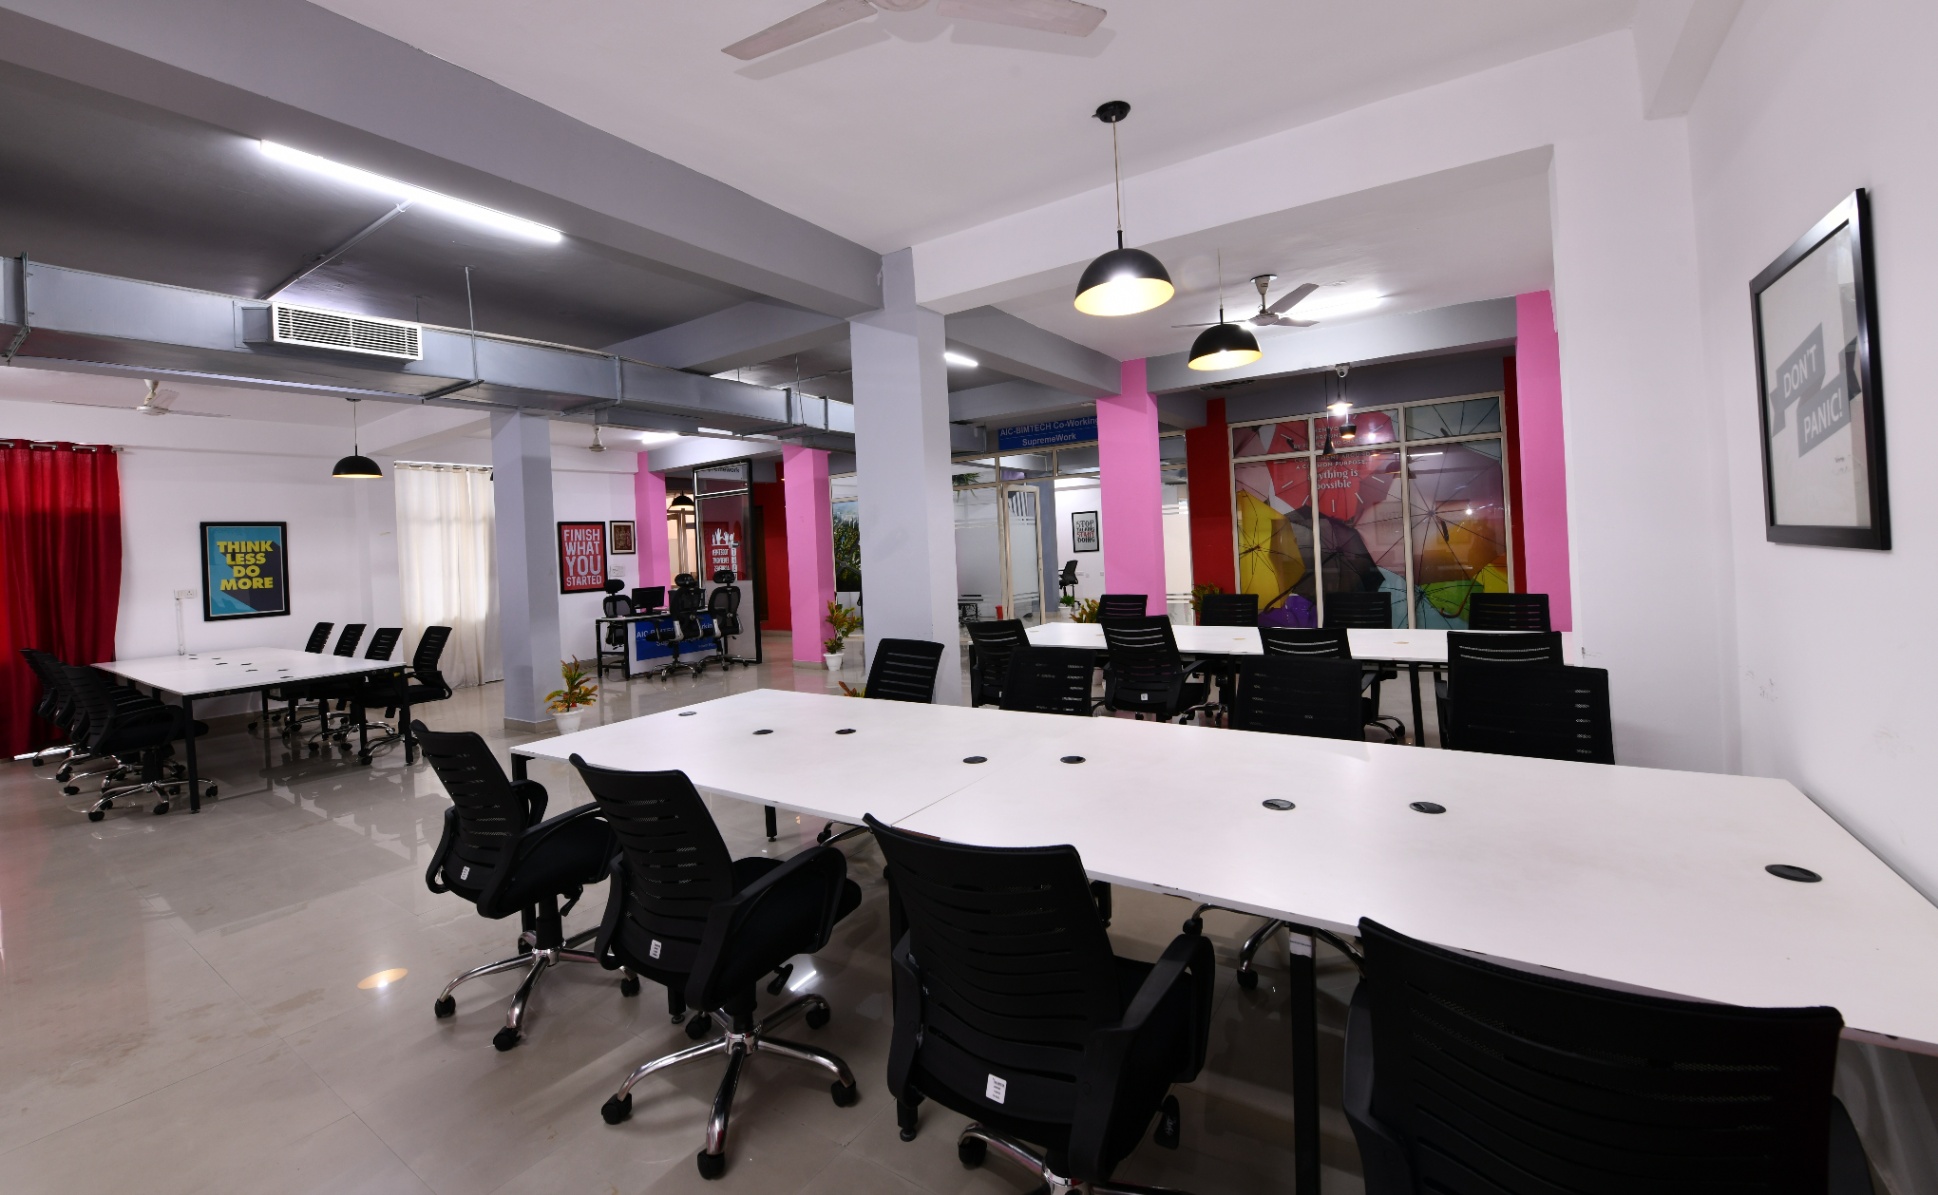 Rent Office/ Shop, 1000 sq ft carpet area, Furnished for rent @Supremework 4th Floor, Rci Vidhya Vihar, Plot No. 36, Knowledge Park III, Greater Noida,,  Uttar pradesh, 201306,